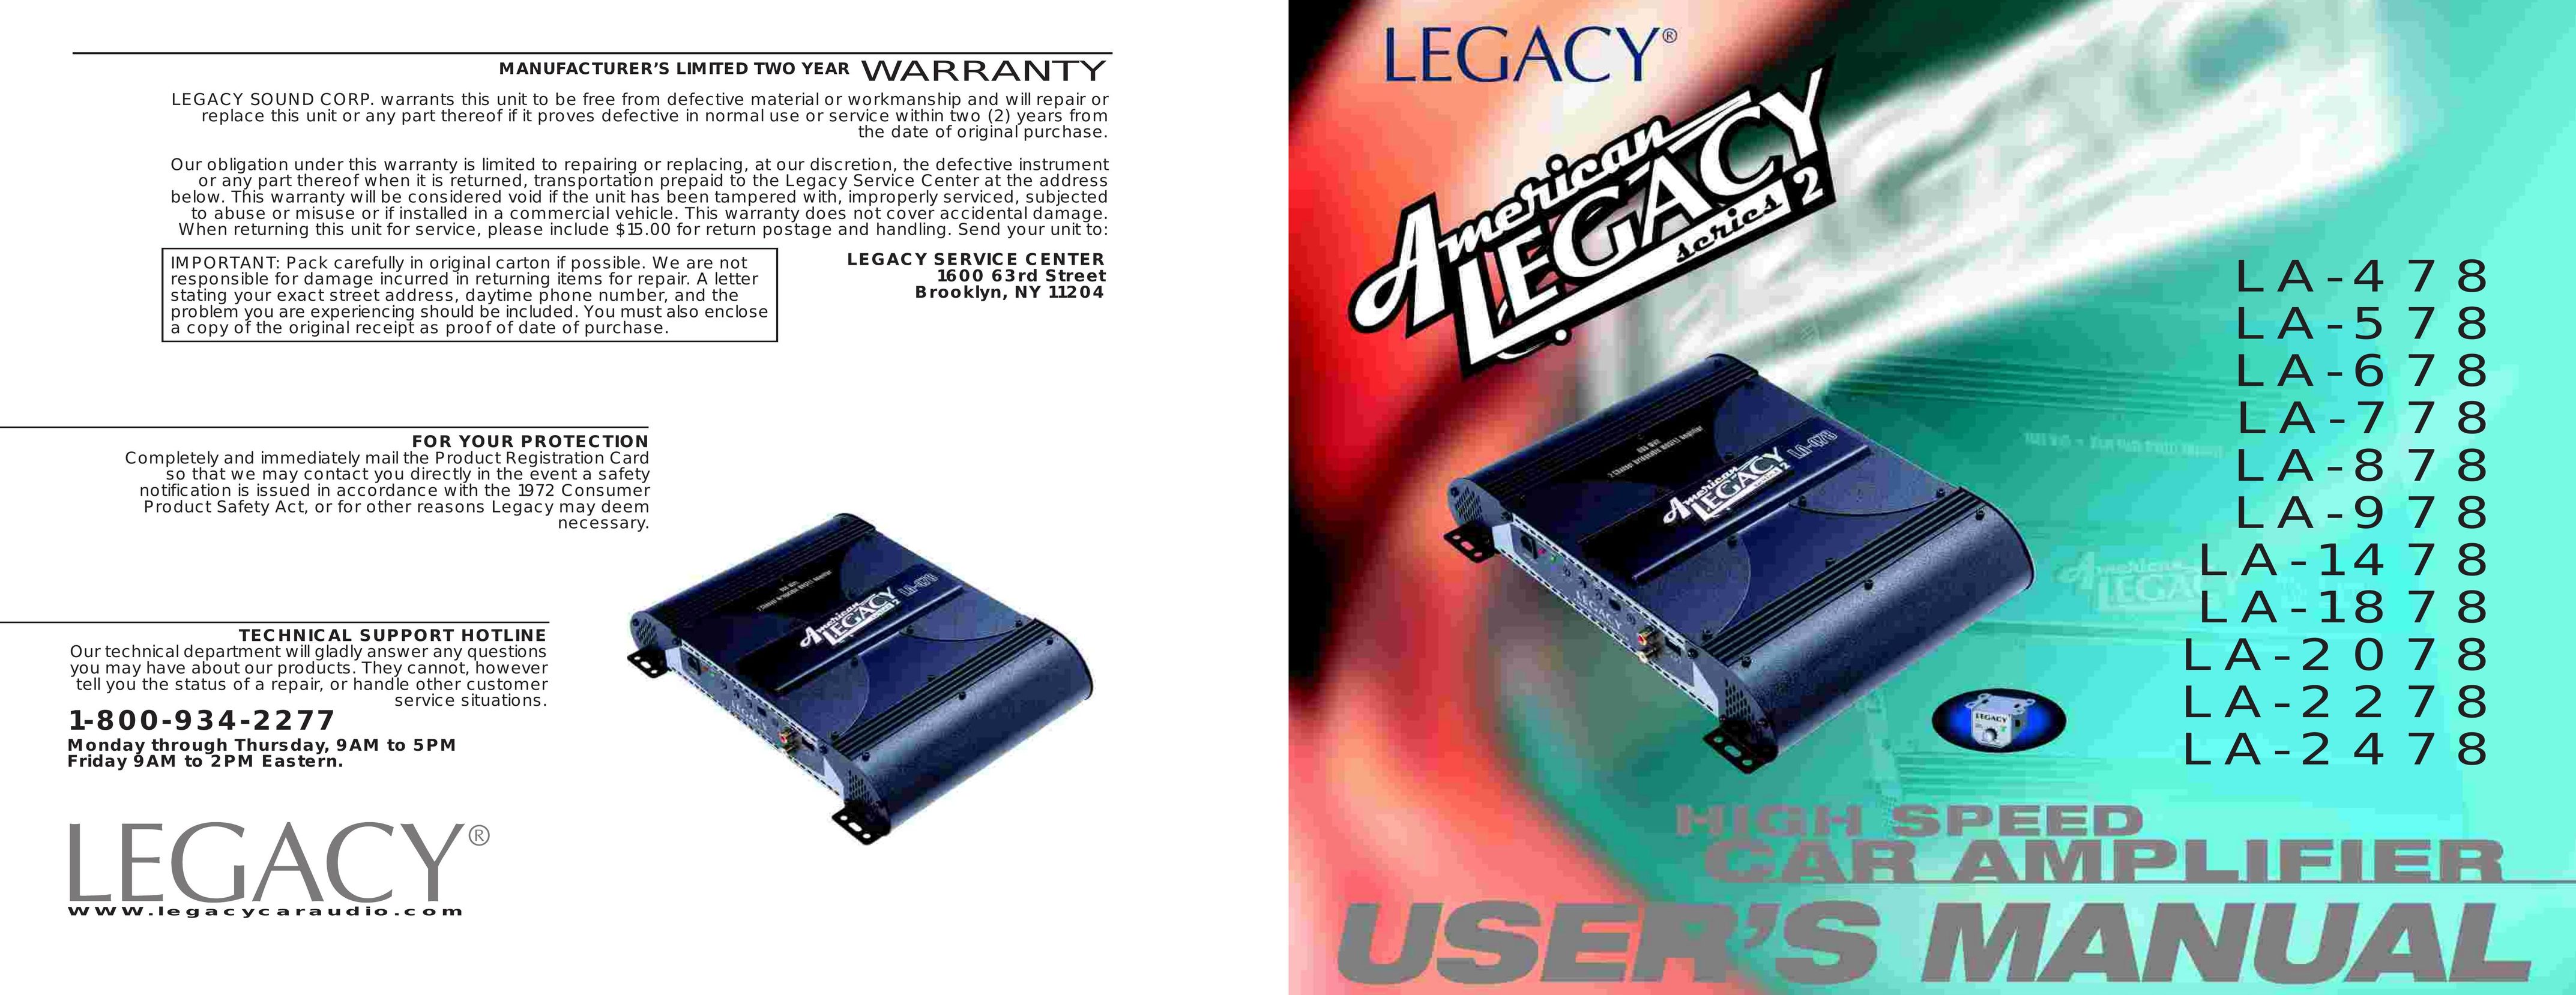 Legacy Car Audio LA-778 Car Amplifier User Manual